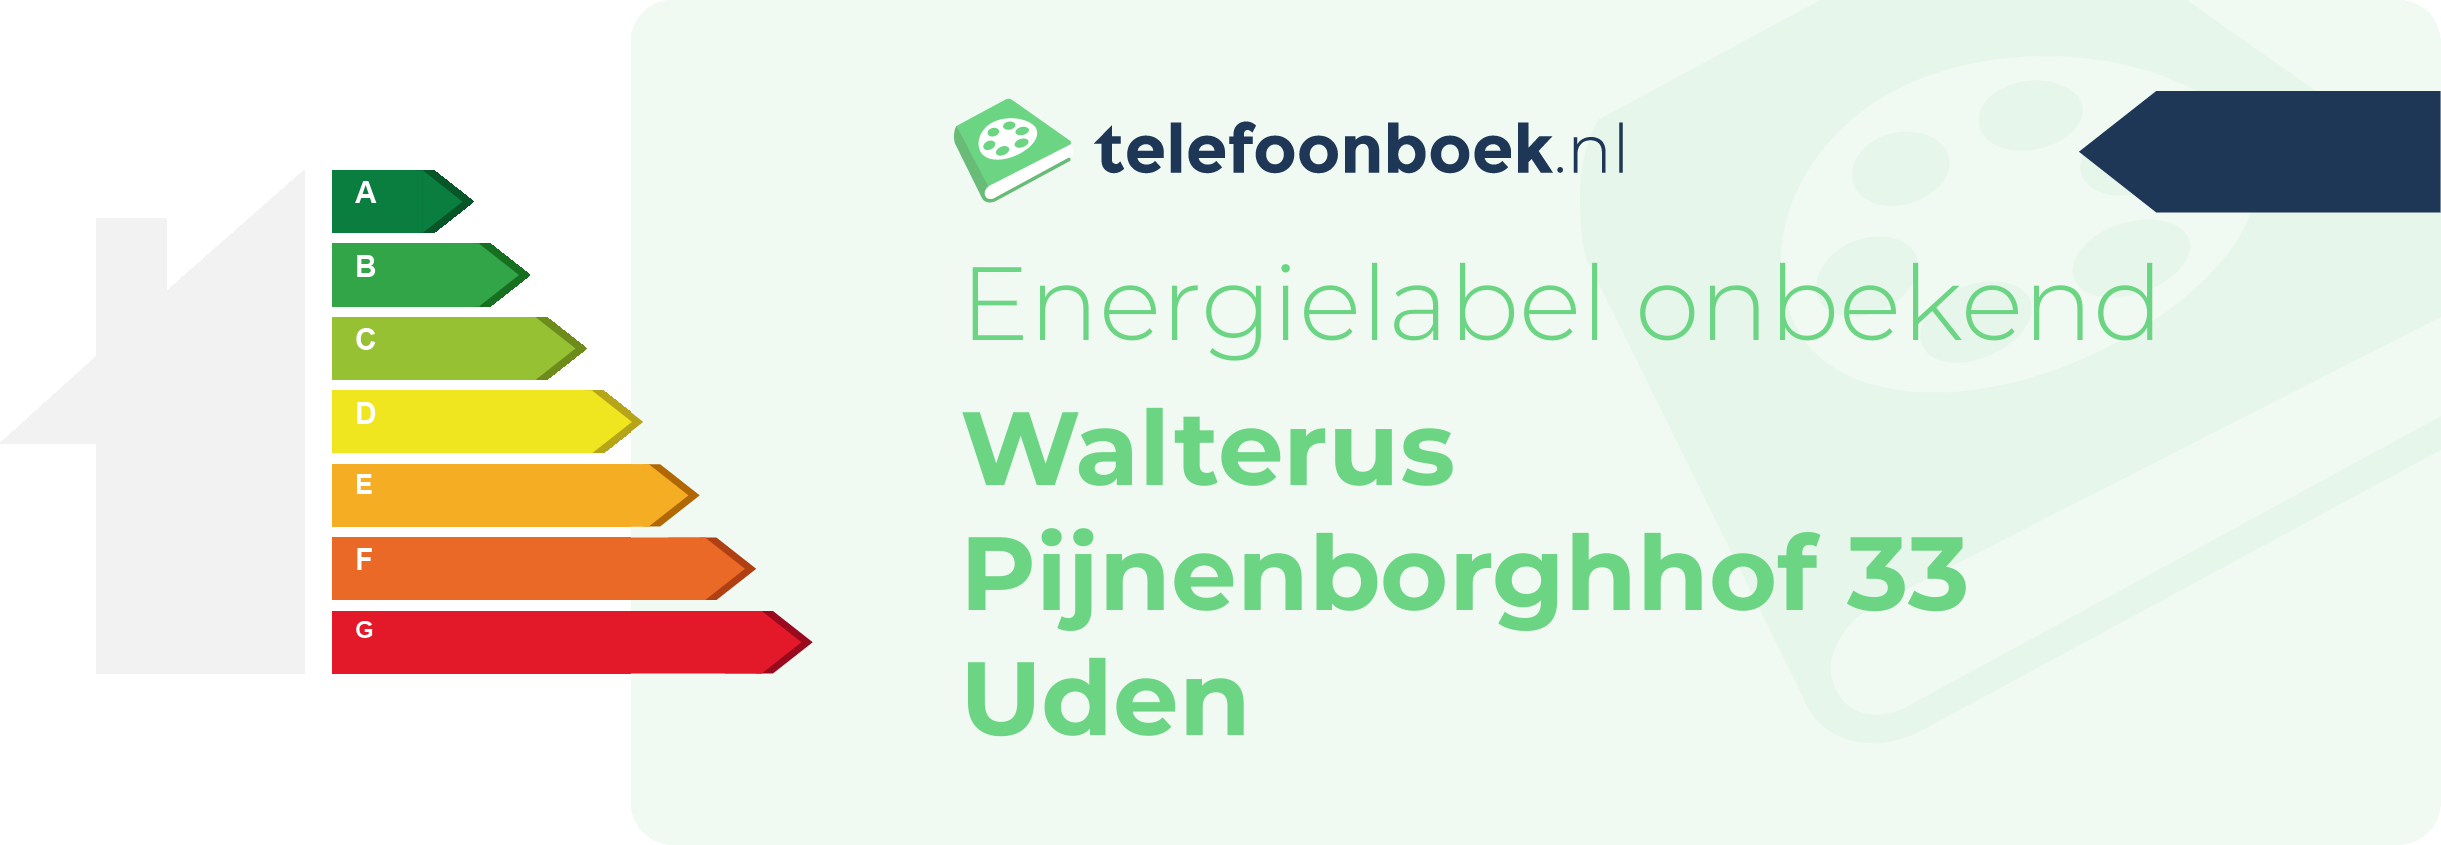 Energielabel Walterus Pijnenborghhof 33 Uden